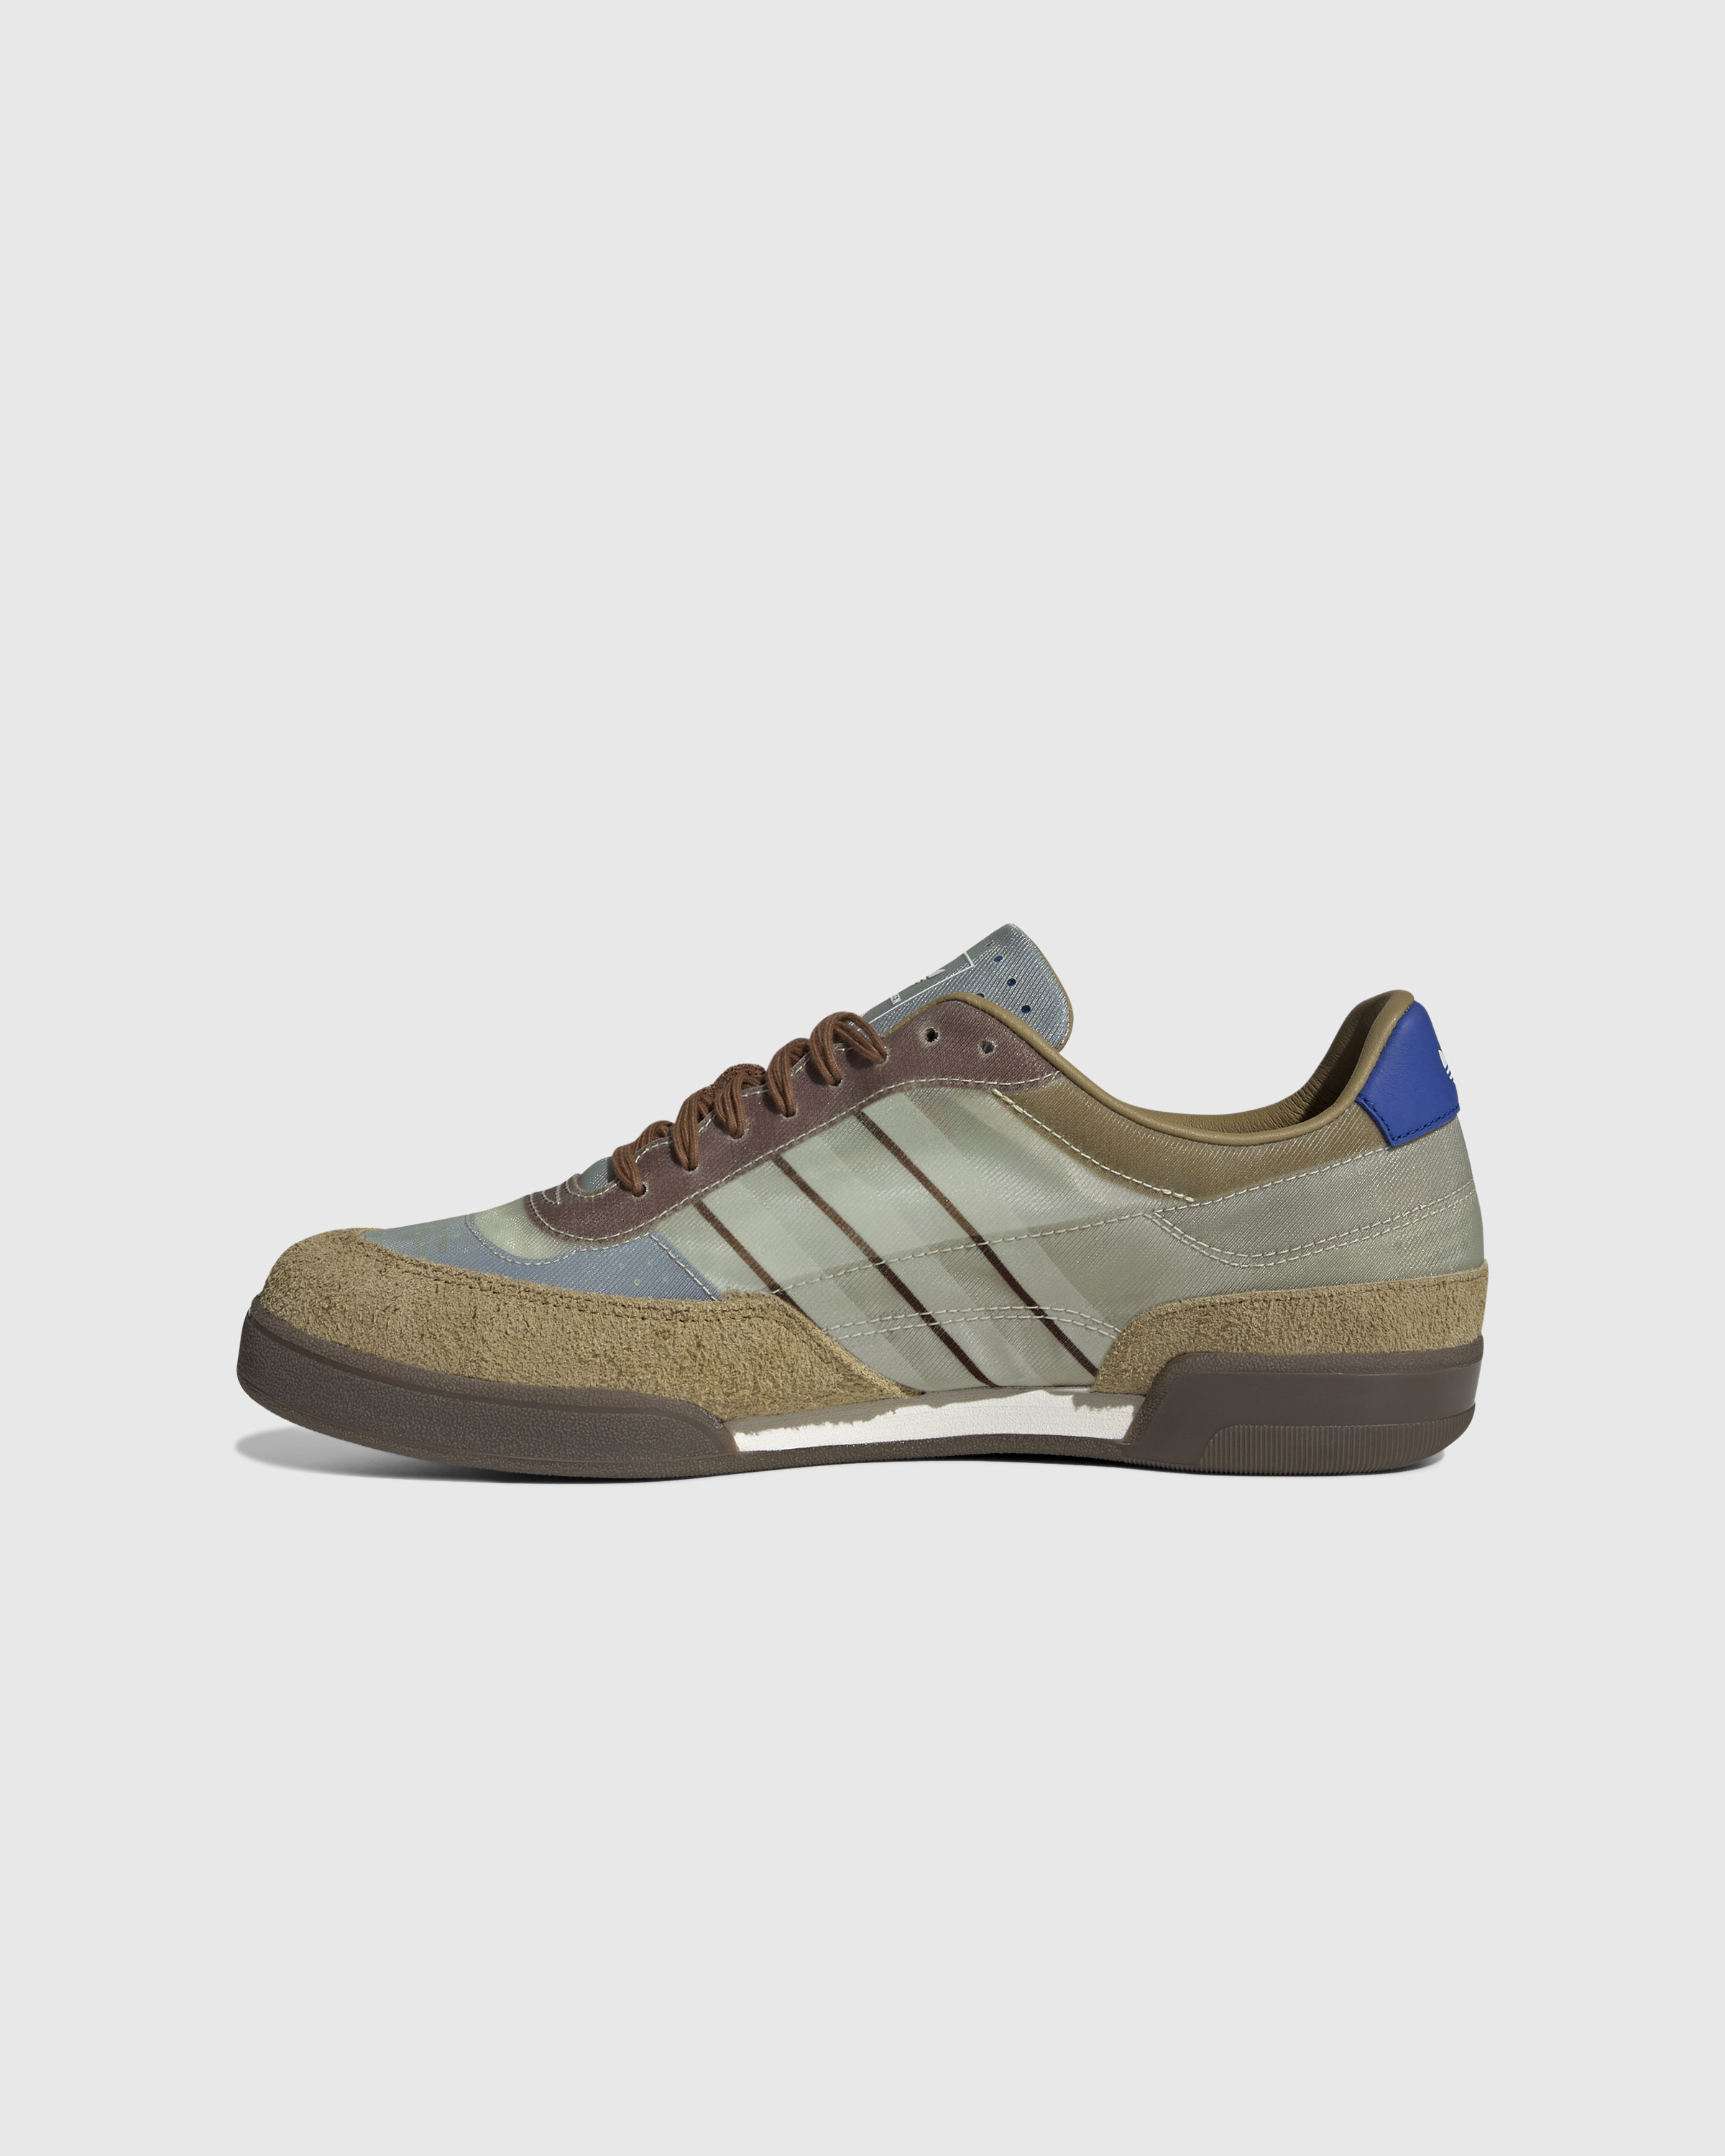 Adidas x Craig Green – Squash Polta Akh Dark Brown/Core Black/Blue - Low Top Sneakers - Brown - Image 2